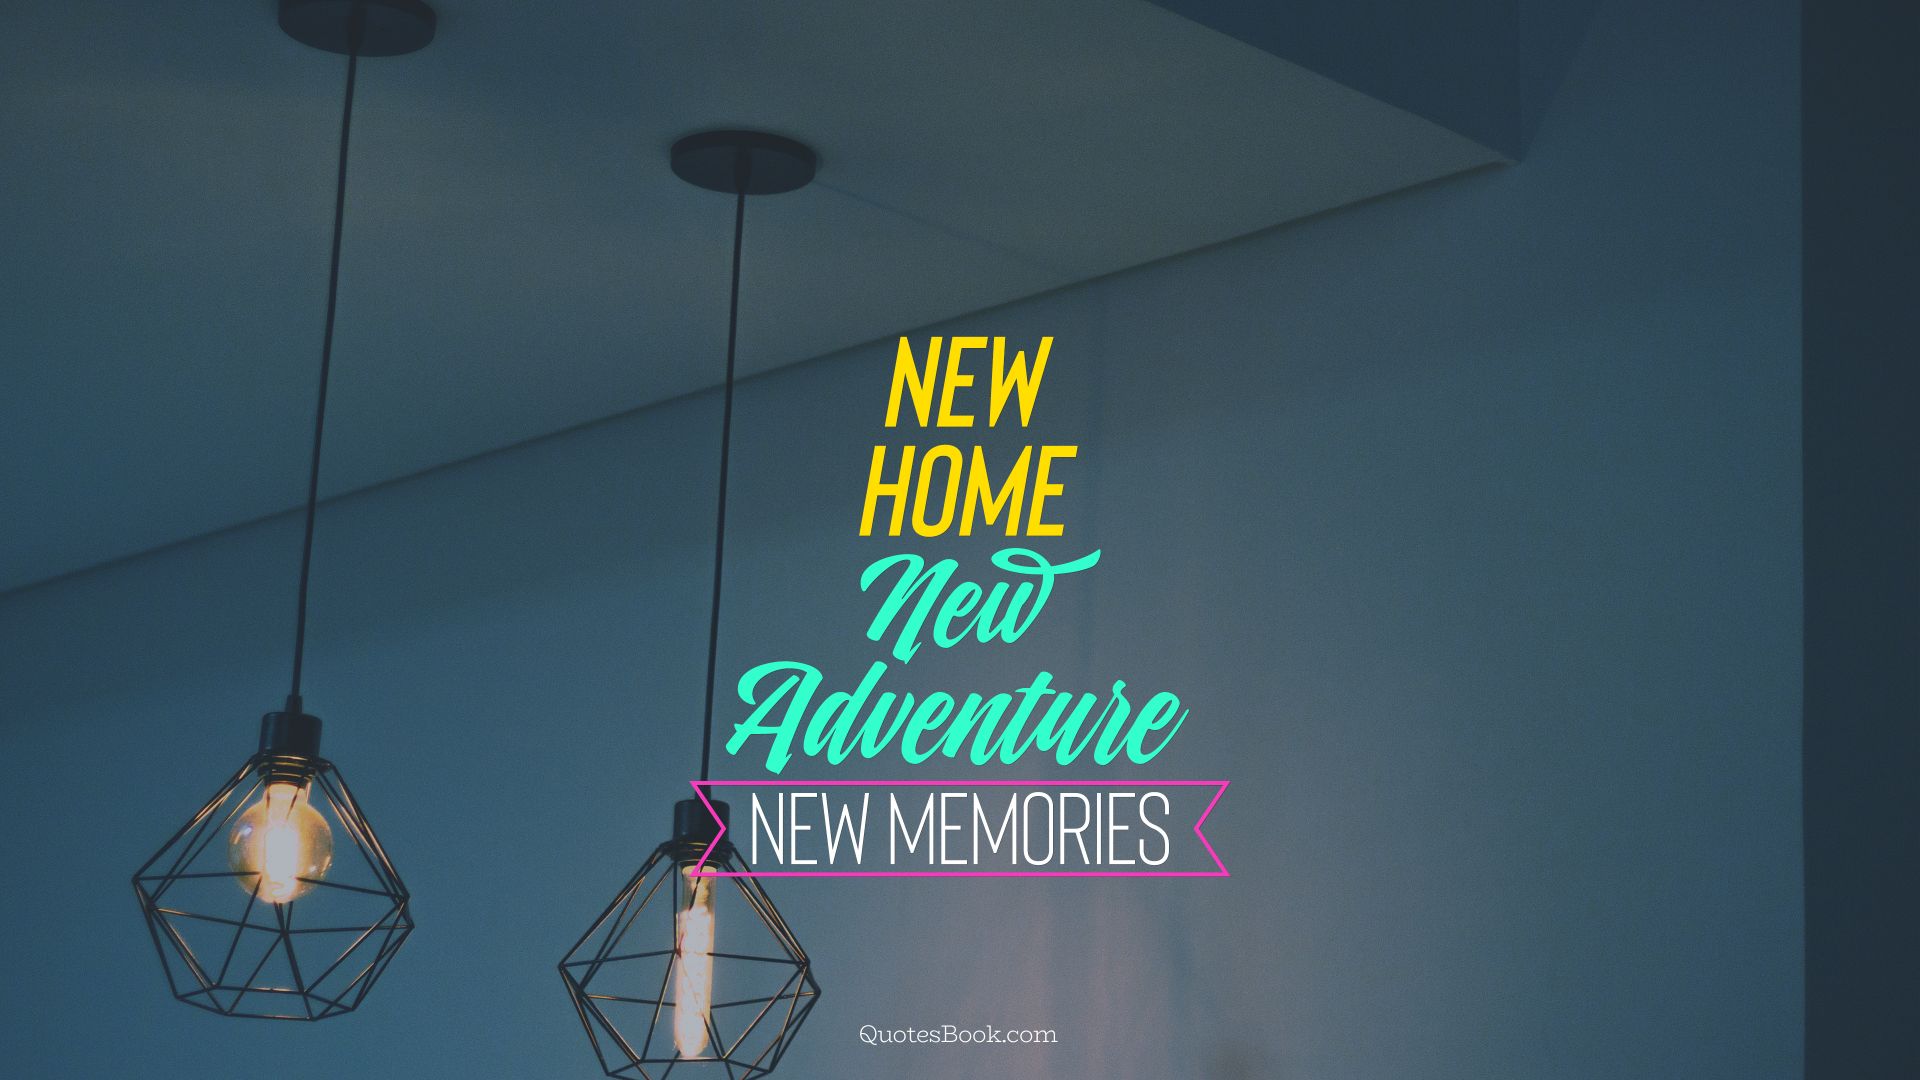 New Home, New Adventure, New Memories